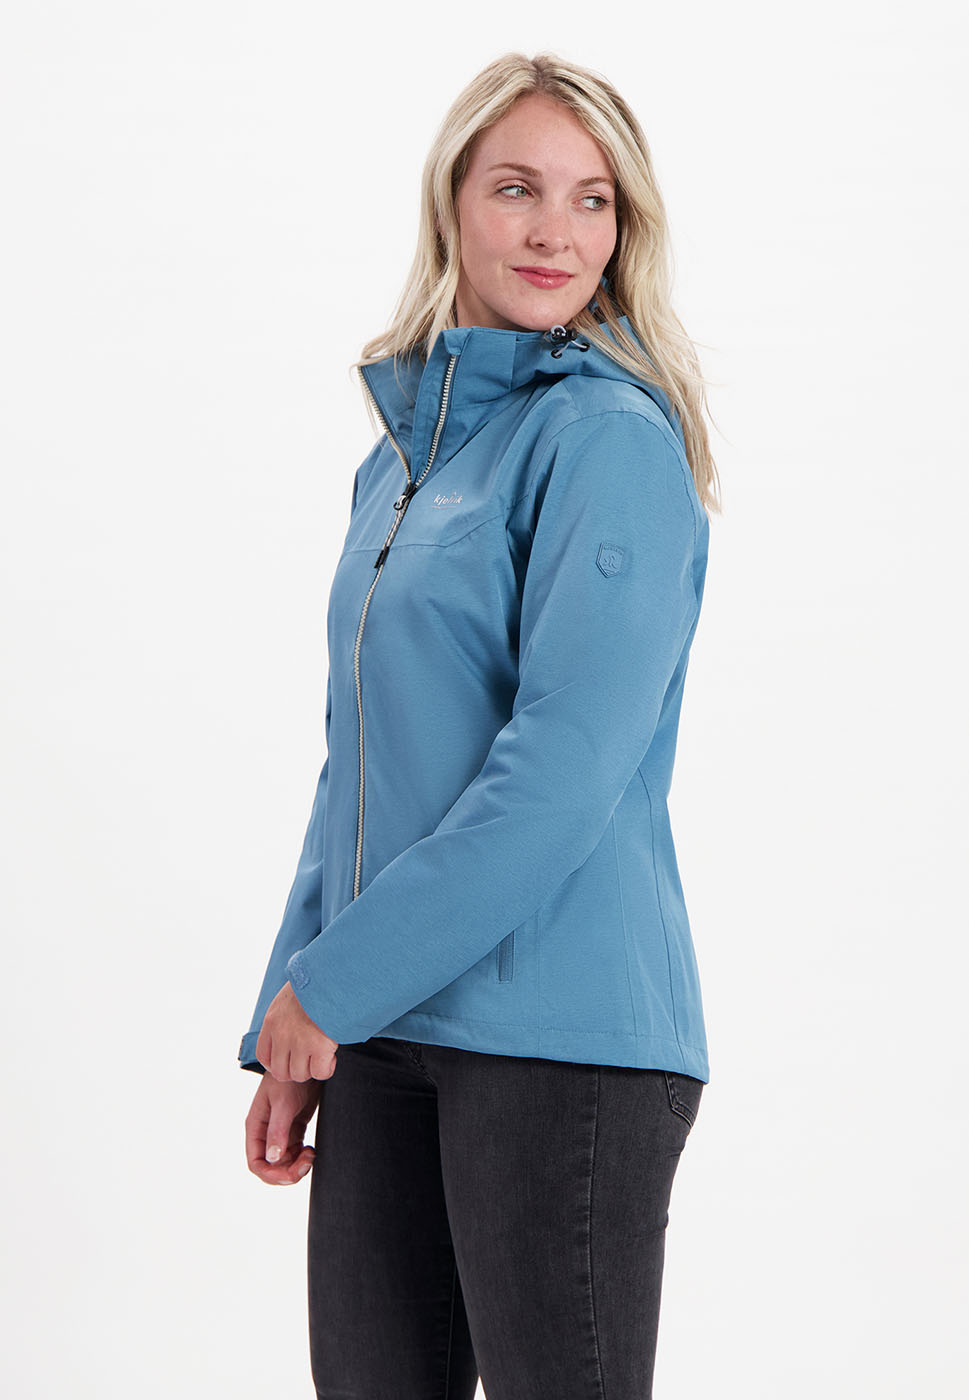 Kjelvik Scandinavian Clothing - Women Jackets Fara Blue